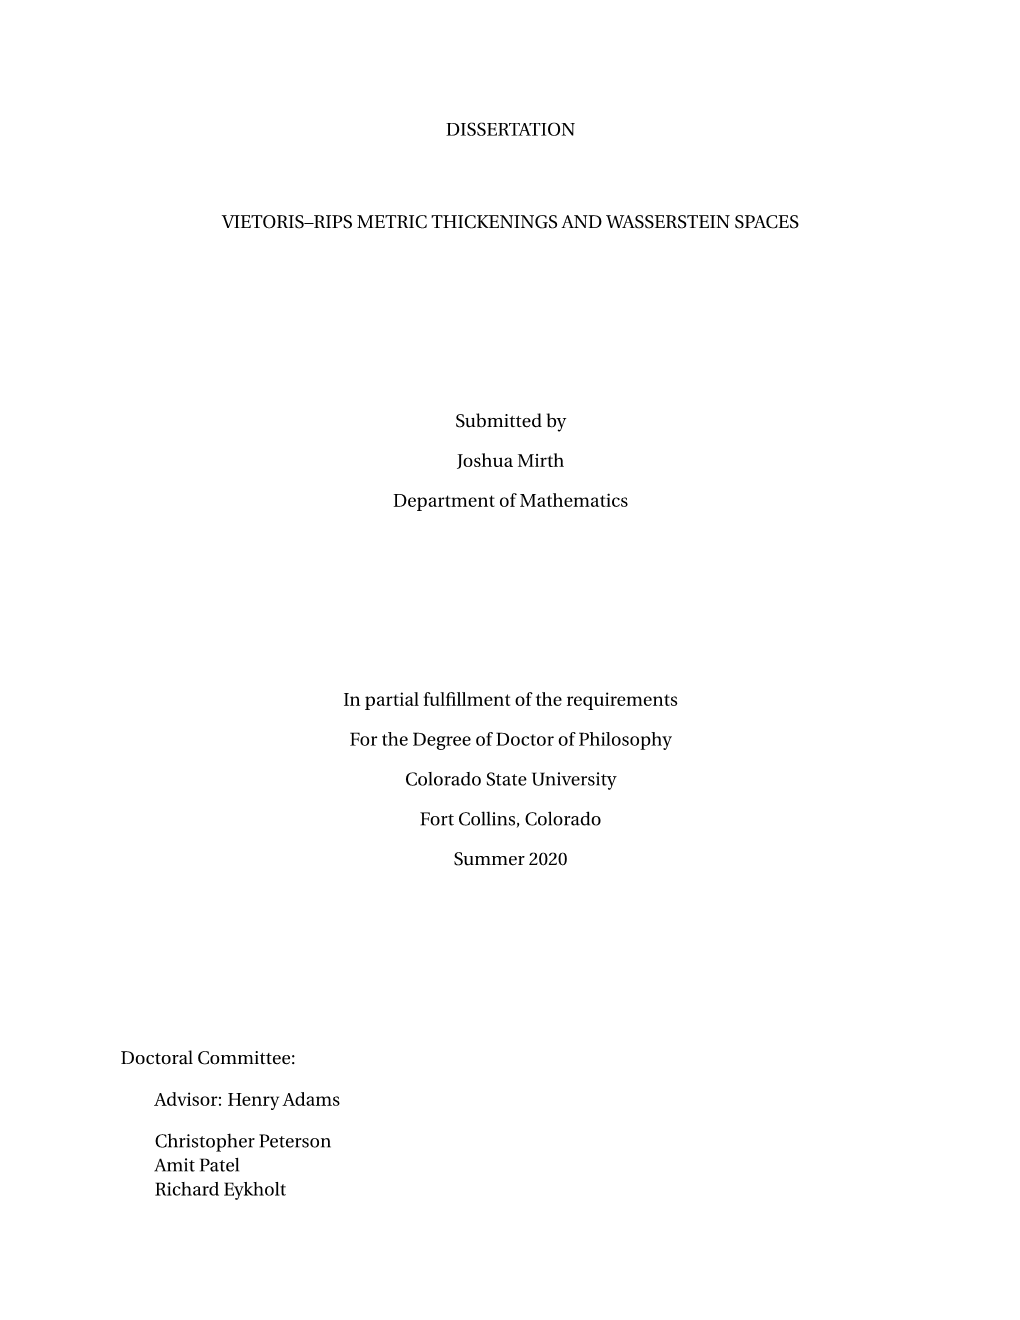 Dissertation Vietoris–Rips Metric Thickenings And